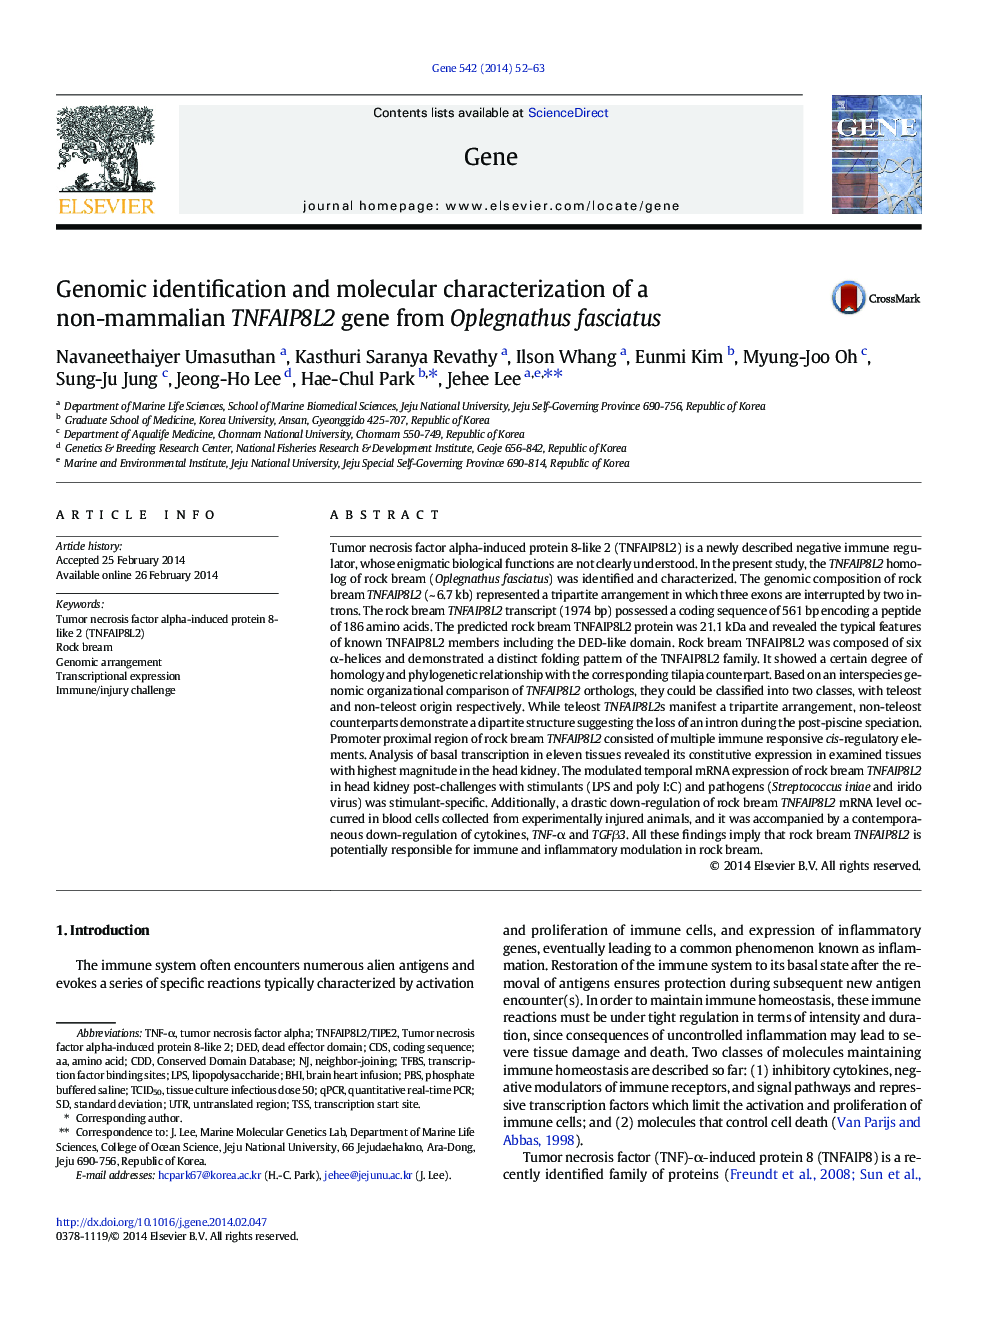 Genomic identification and molecular characterization of a non-mammalian TNFAIP8L2 gene from Oplegnathus fasciatus